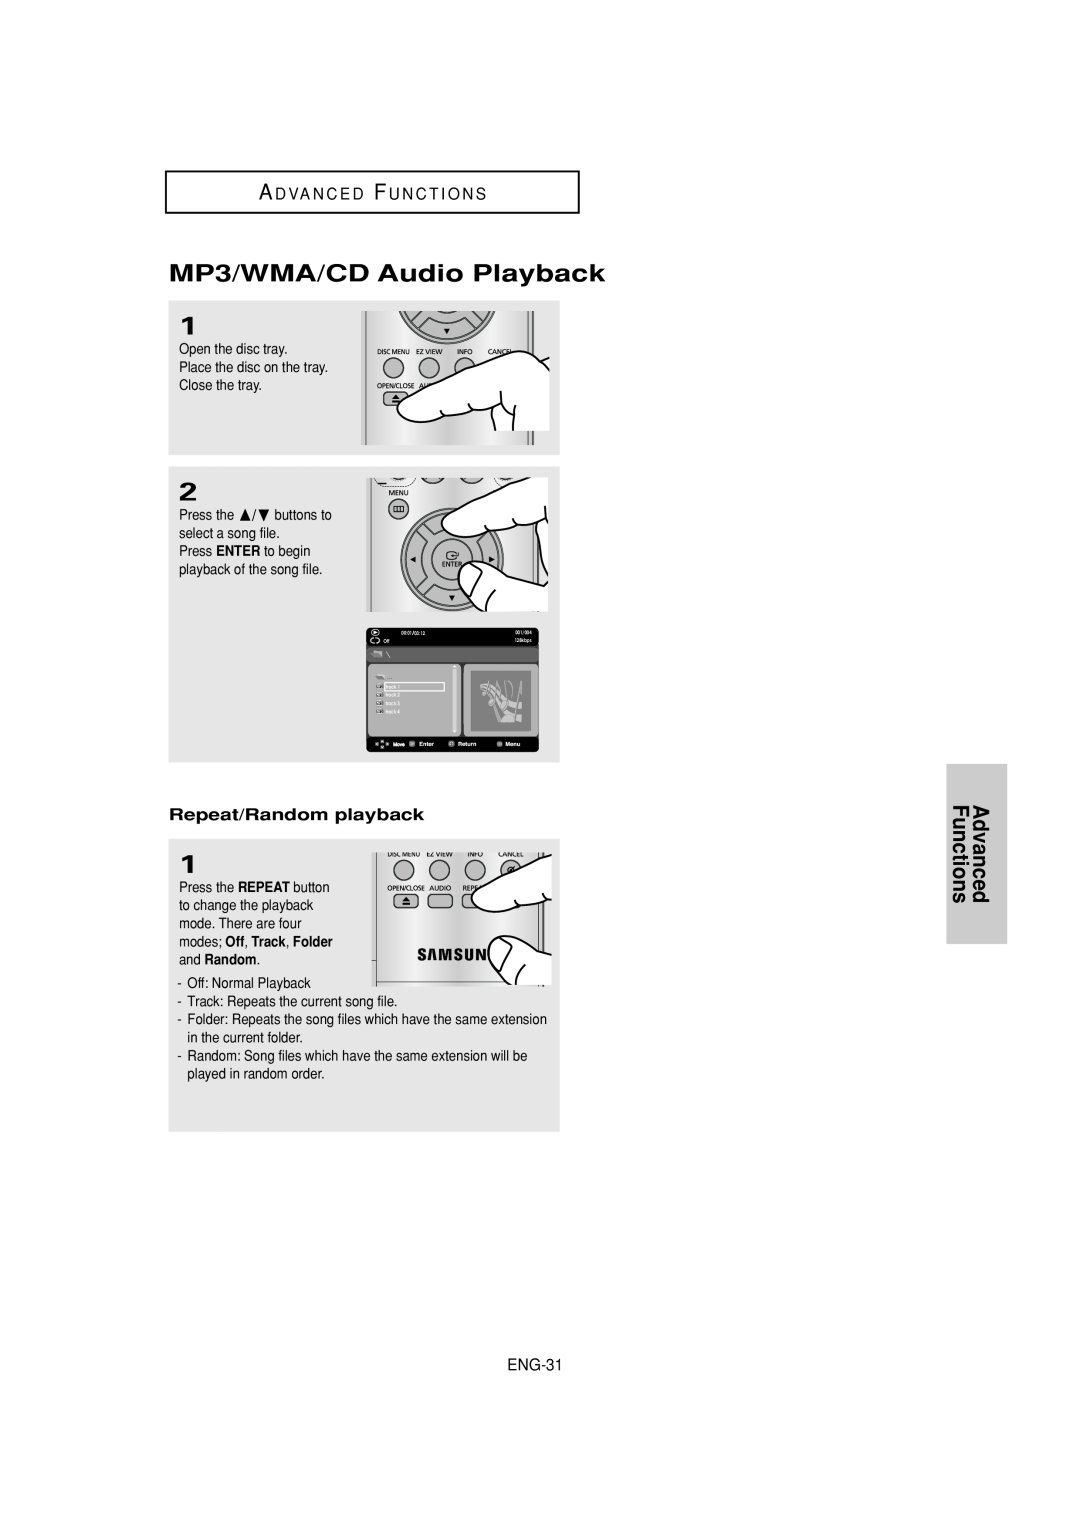 Samsung DVD-P181 MP3/WMA/CD Audio Playback, Advanced Functions, A D Va N C E D F U N C T I O N S, Repeat/Random playback 